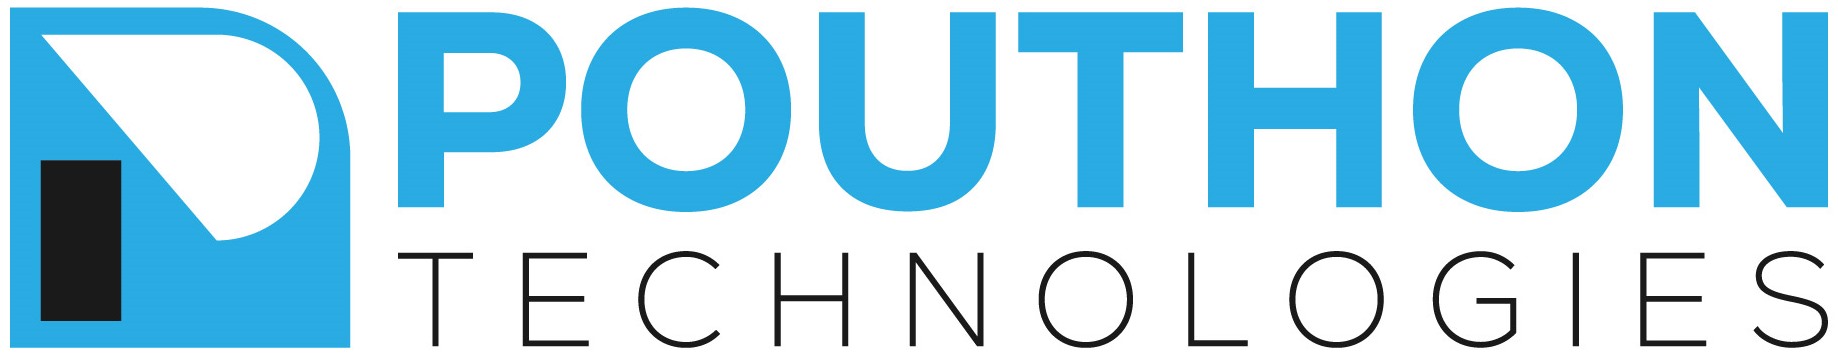 Pouthon Technologies